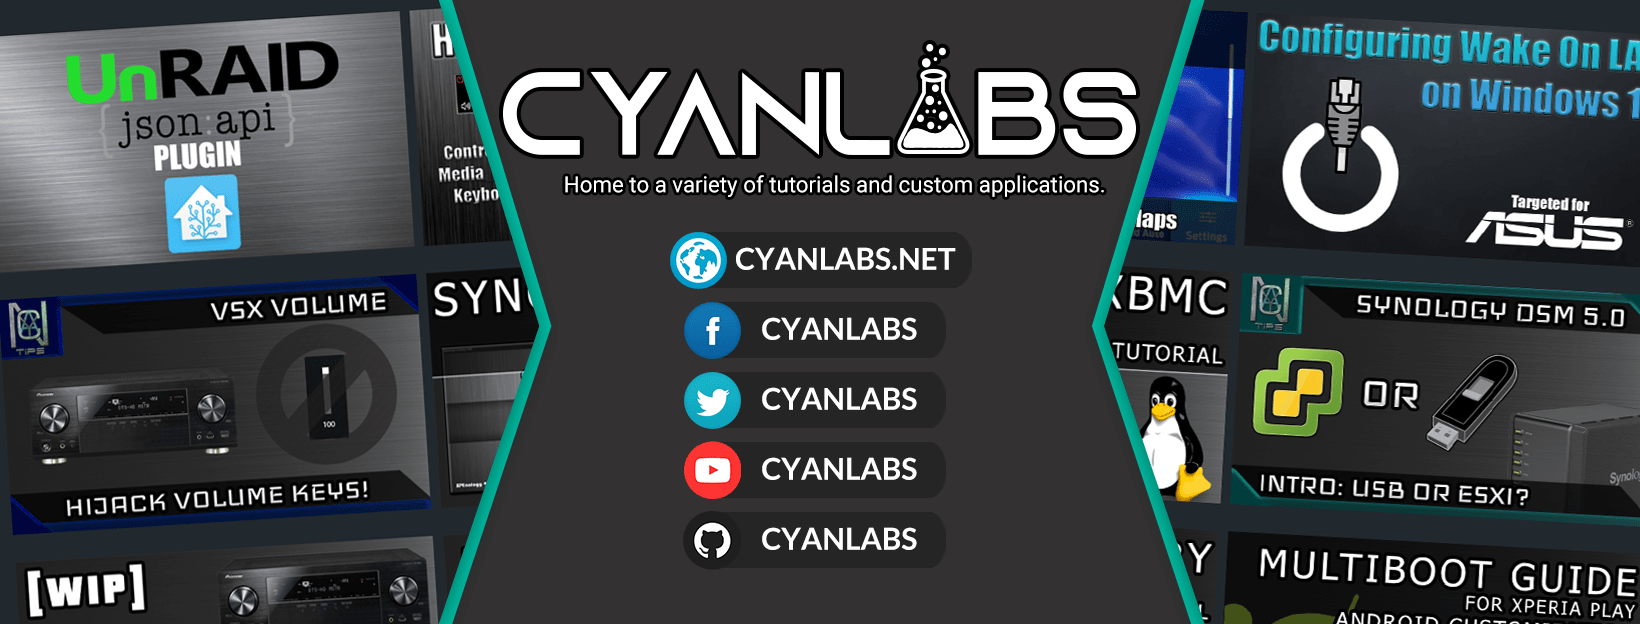 Cyanlabs 2020 Social Cover Photo